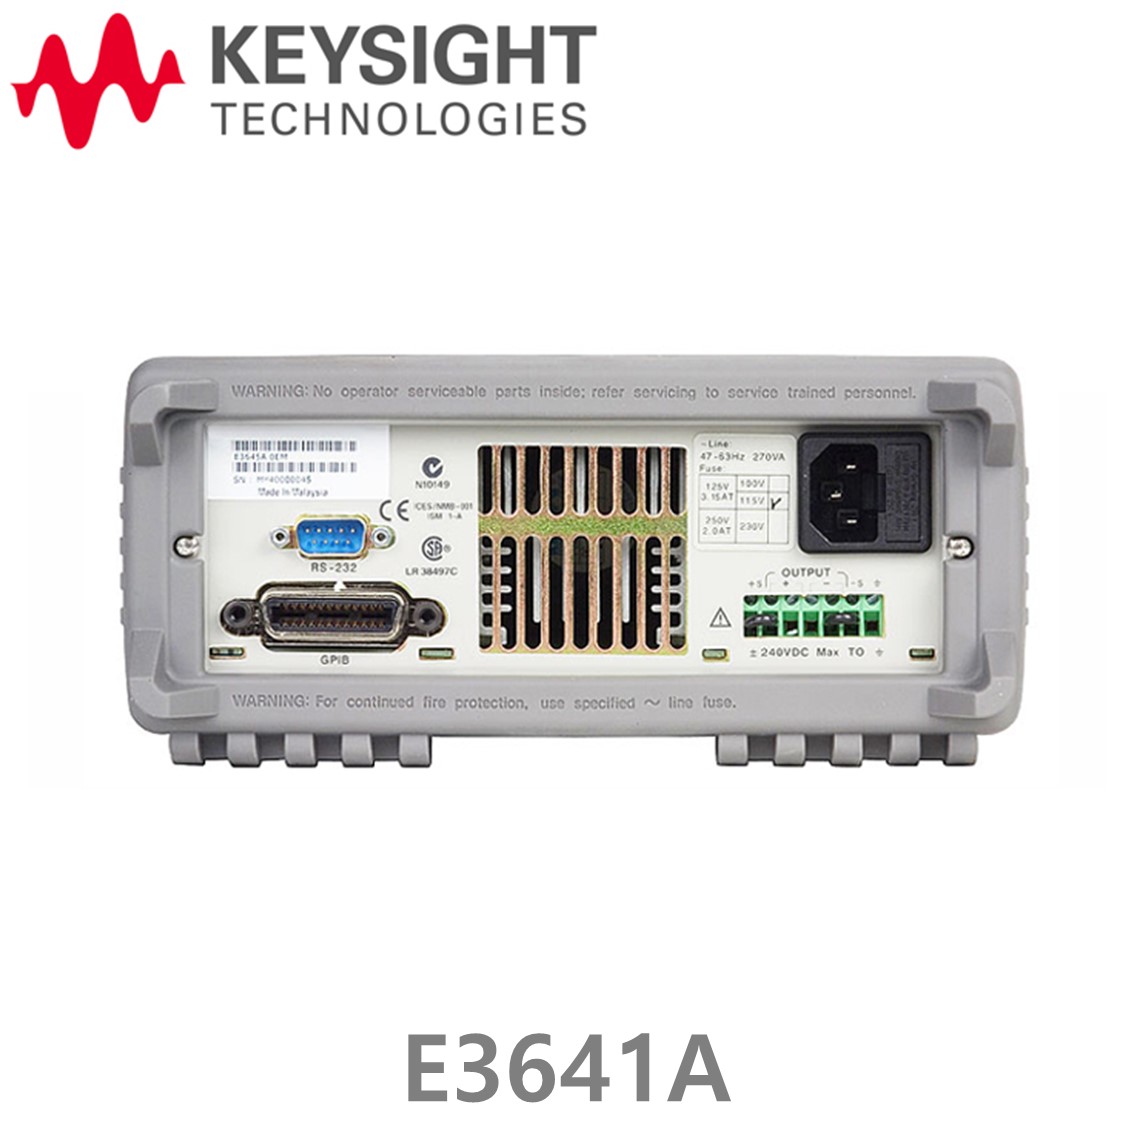 [ KEYSIGHT E3641A ] 키사이트 DC파워서플라이 30W 35V/0.8A or 60V/0.5A, DC전원공급기